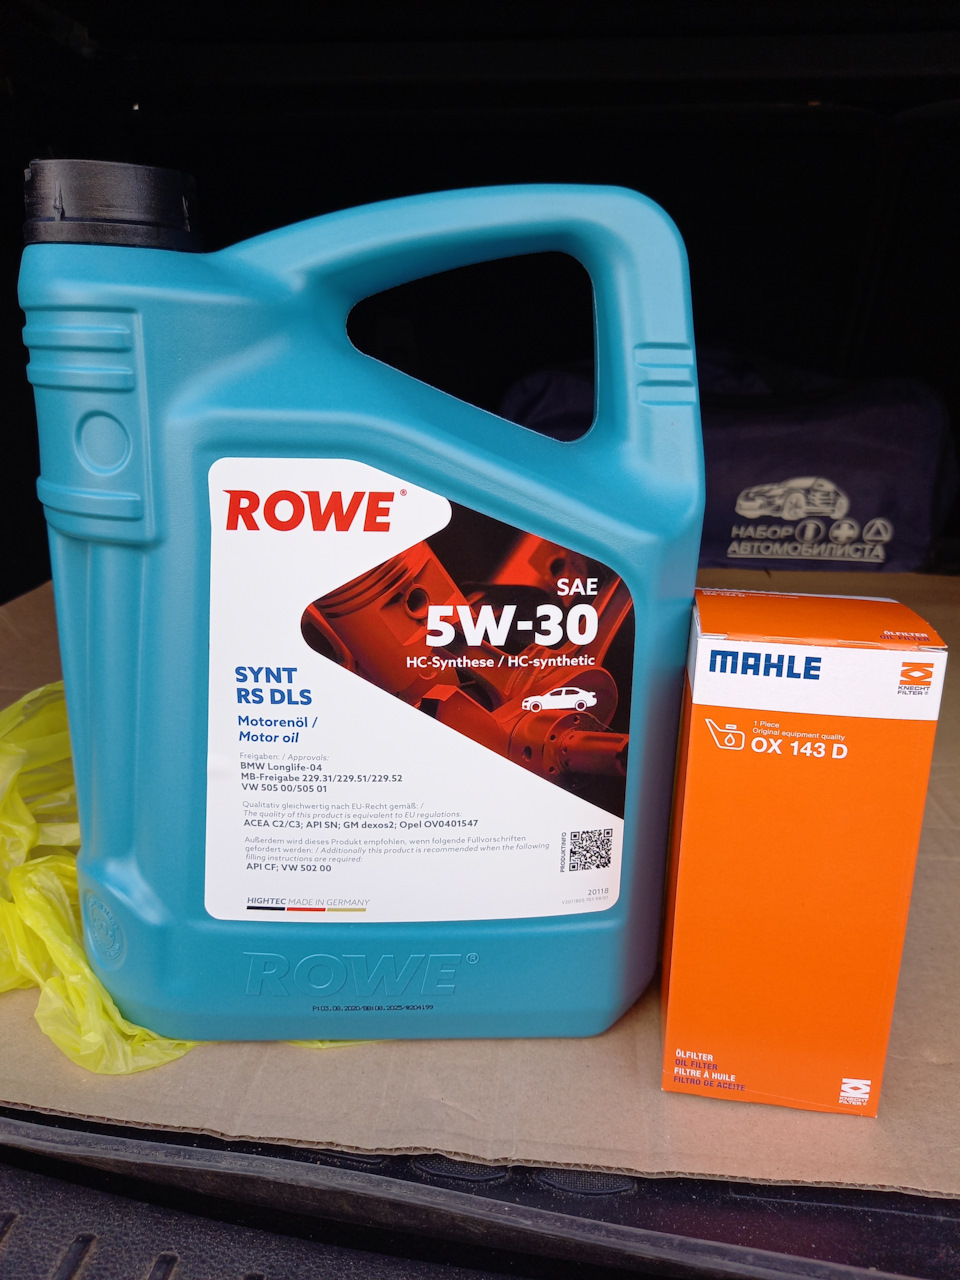 Rove масло. Масло Rowe 5w30. Rowe 5w30 Synt. Rowe масло 5/30. Rowe 5w30 a5/b5.